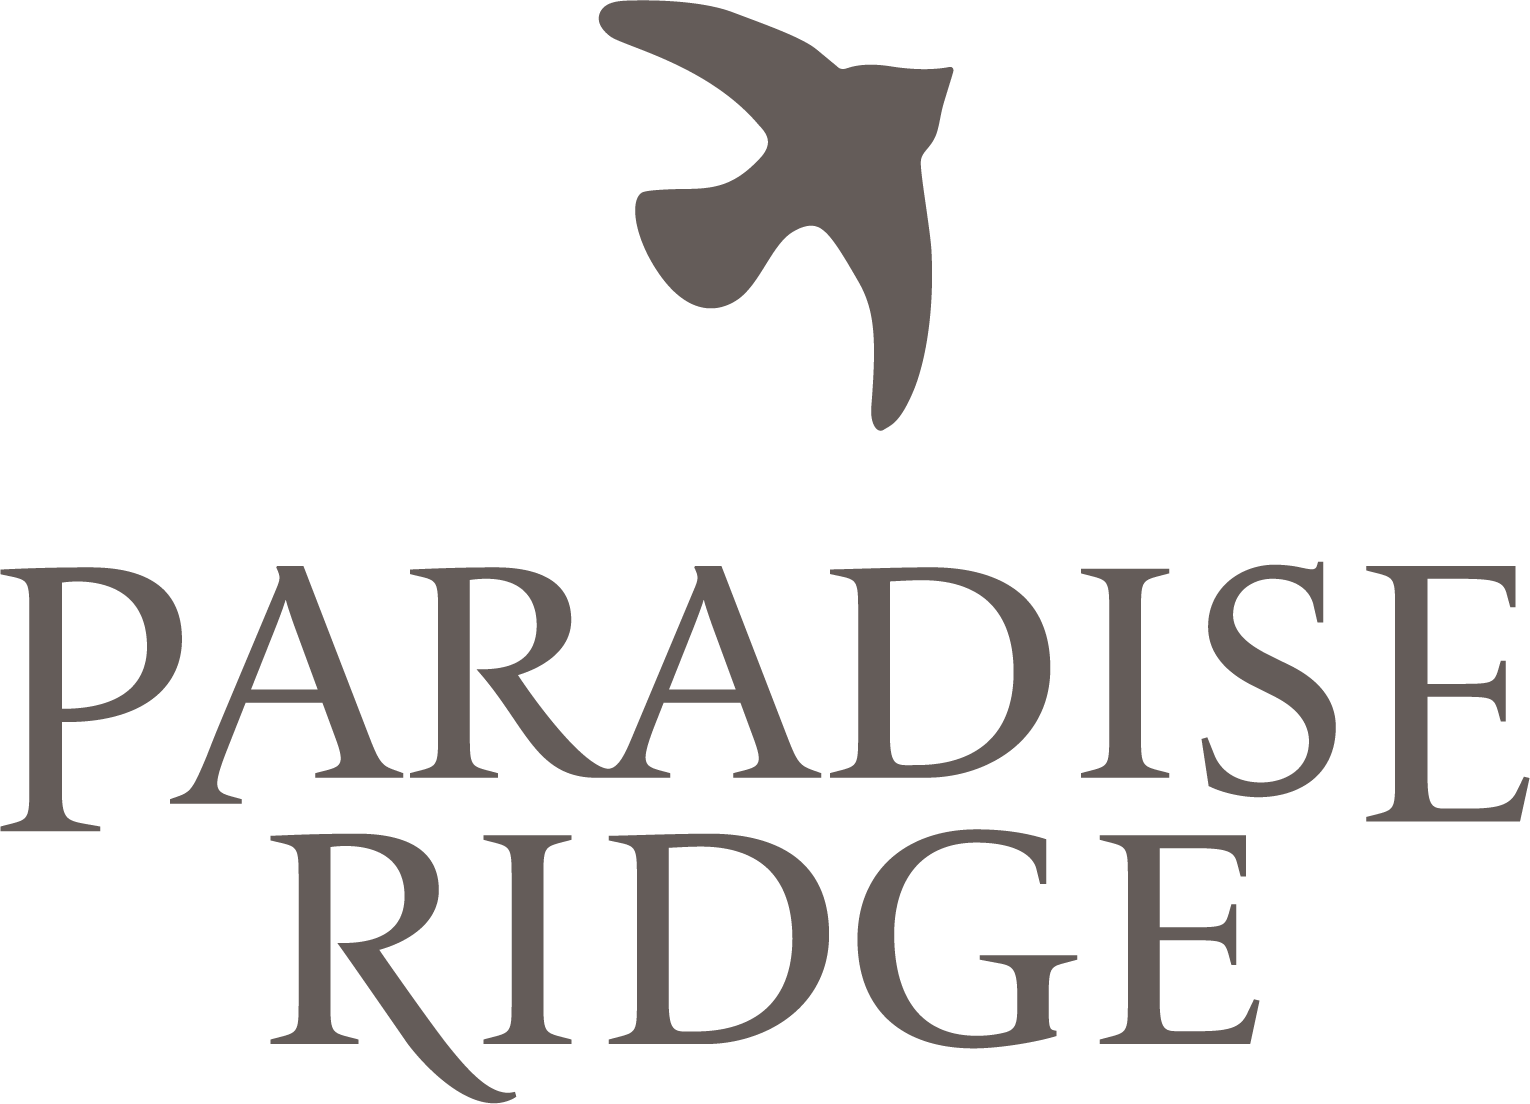 Paradise Ridge Winery